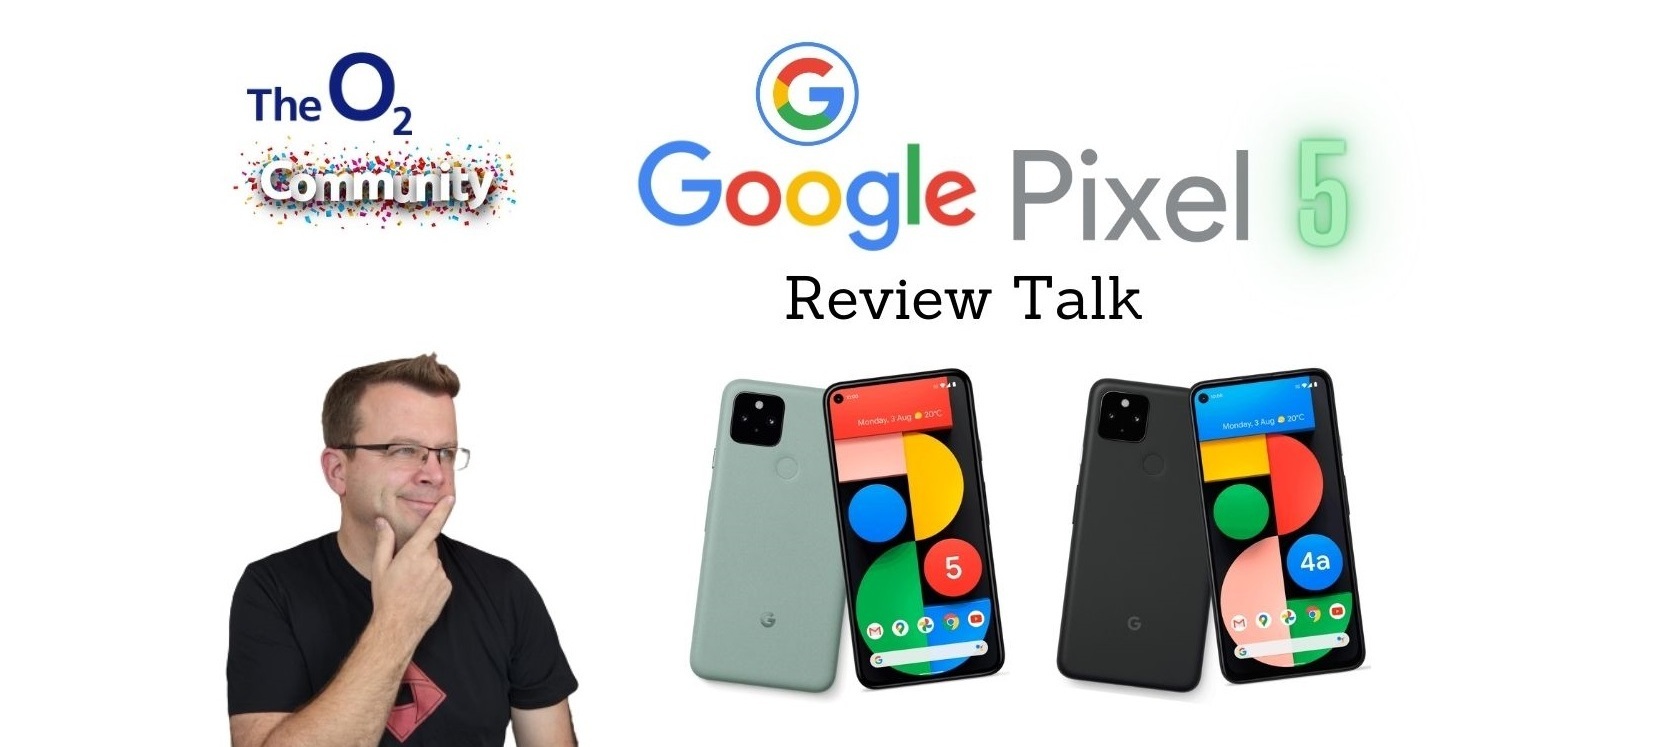 Google Pixel 5 I Review Talk I O2 Tester Community